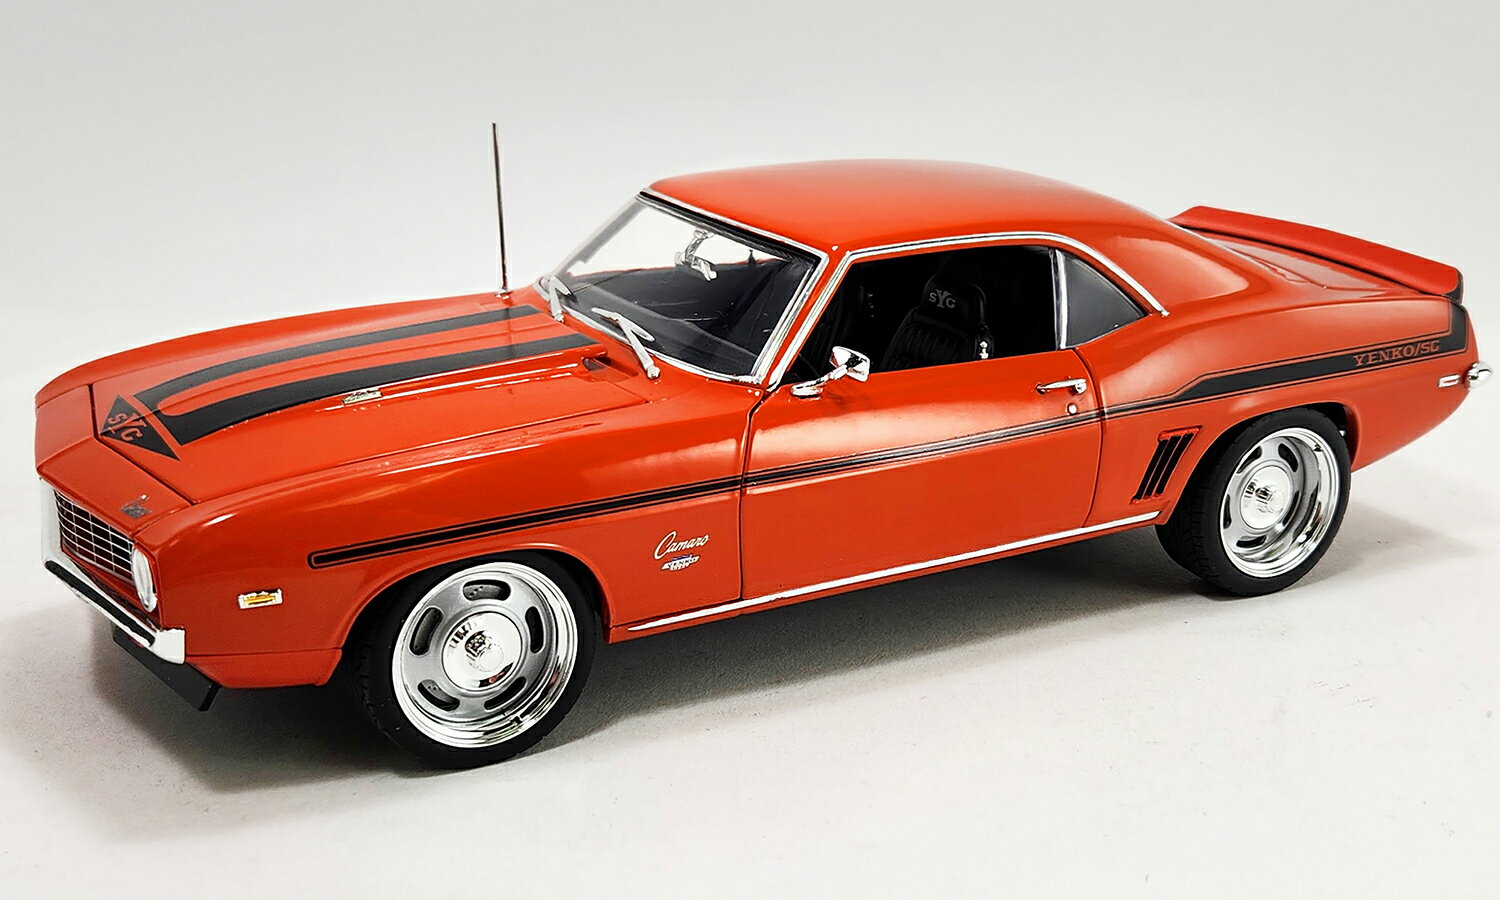 ACME 1/18 ミニカー ダイキャストモデル 1969年モデル シボレー カマロ CHEVROLET YENKO CAMARO 1969 Hugger Orange w/ Black Stripes オレンジ ブラックストライプ